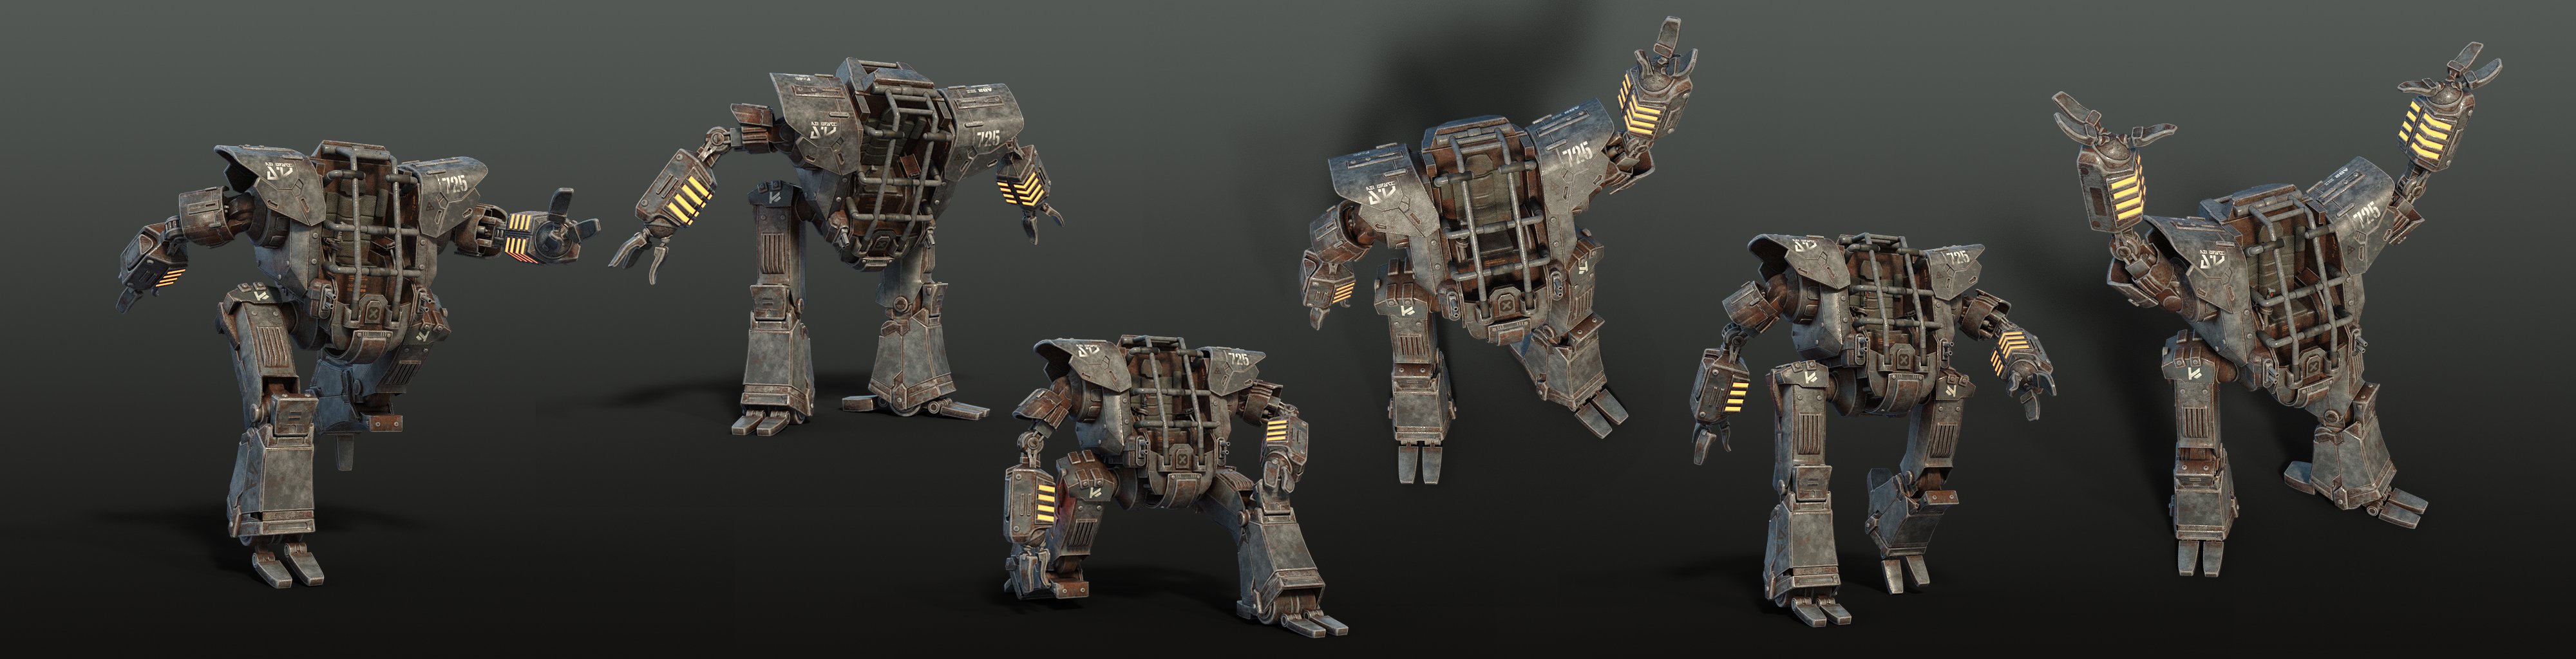 Mining Mech by: The AntFarm, 3D Models by Daz 3D